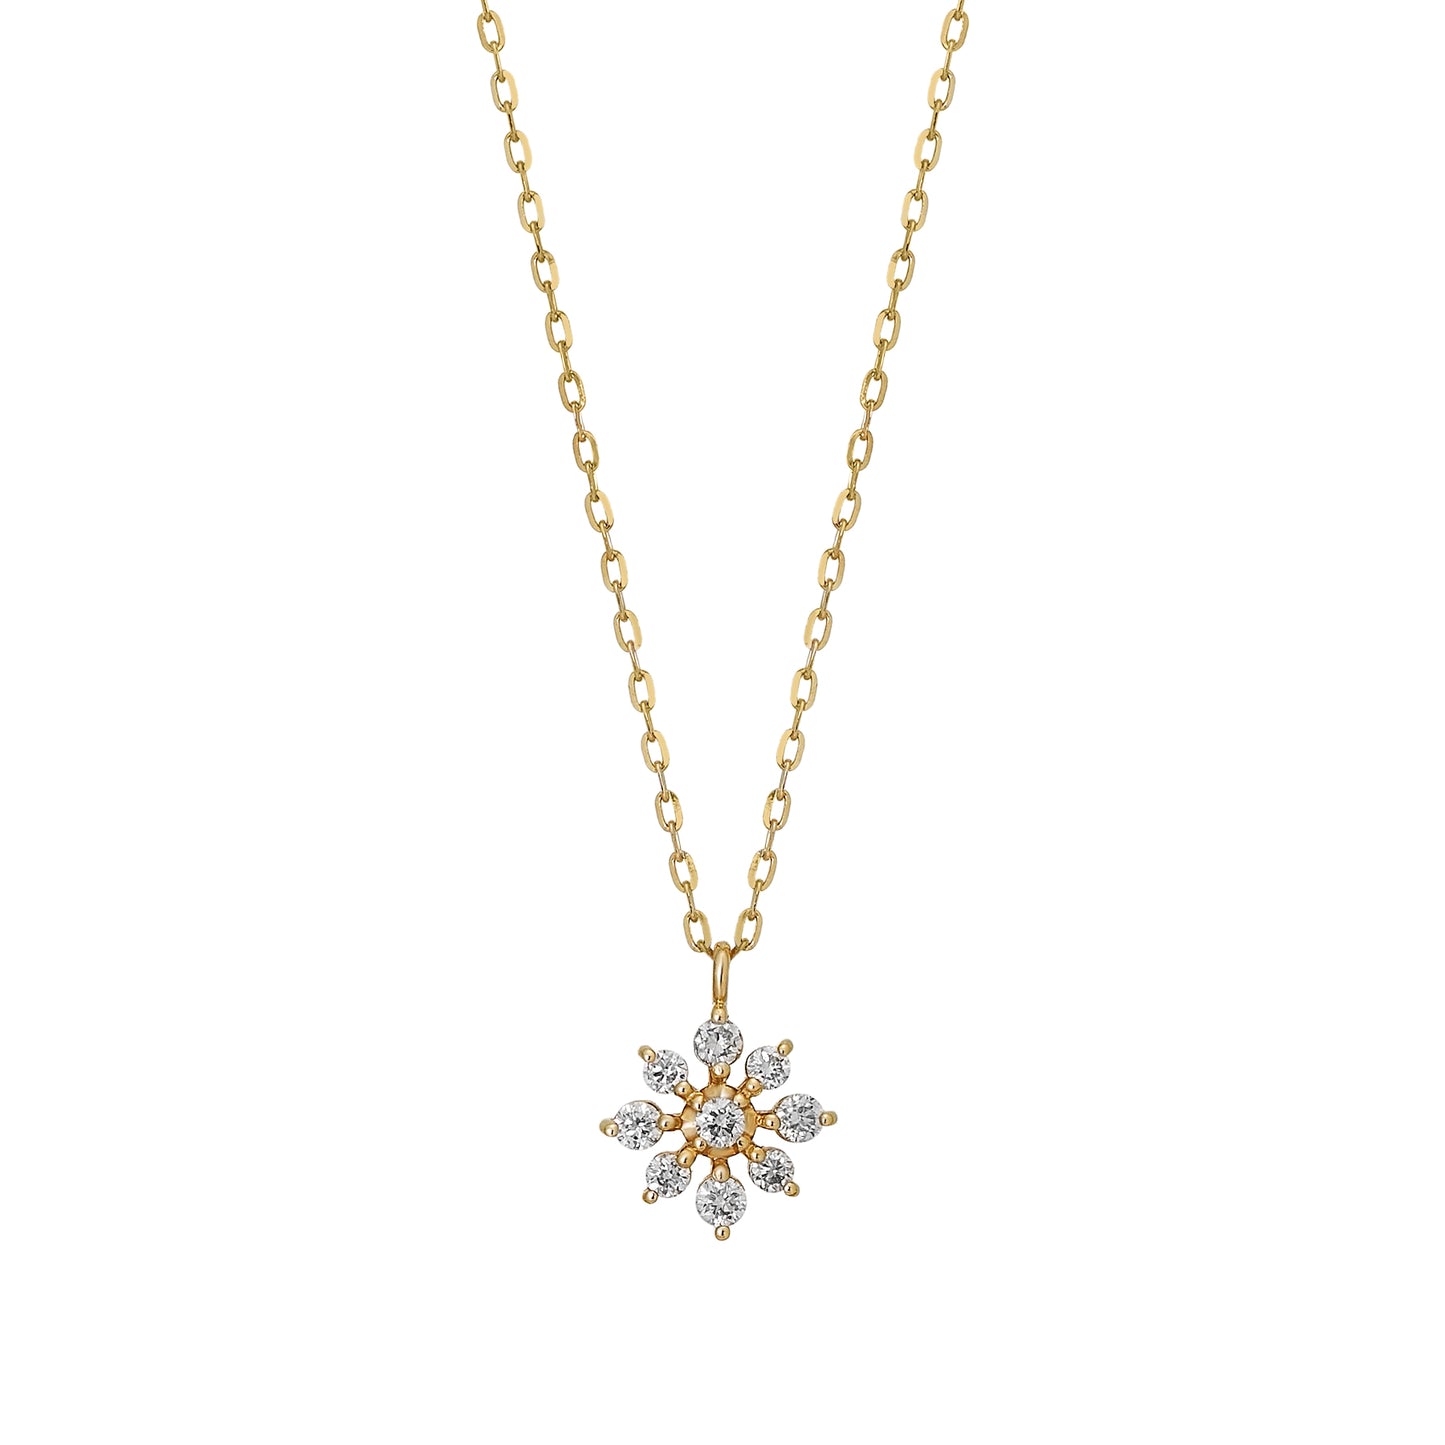 10K Yellow Gold Diamond Sparkle Design Necklace - Product Image